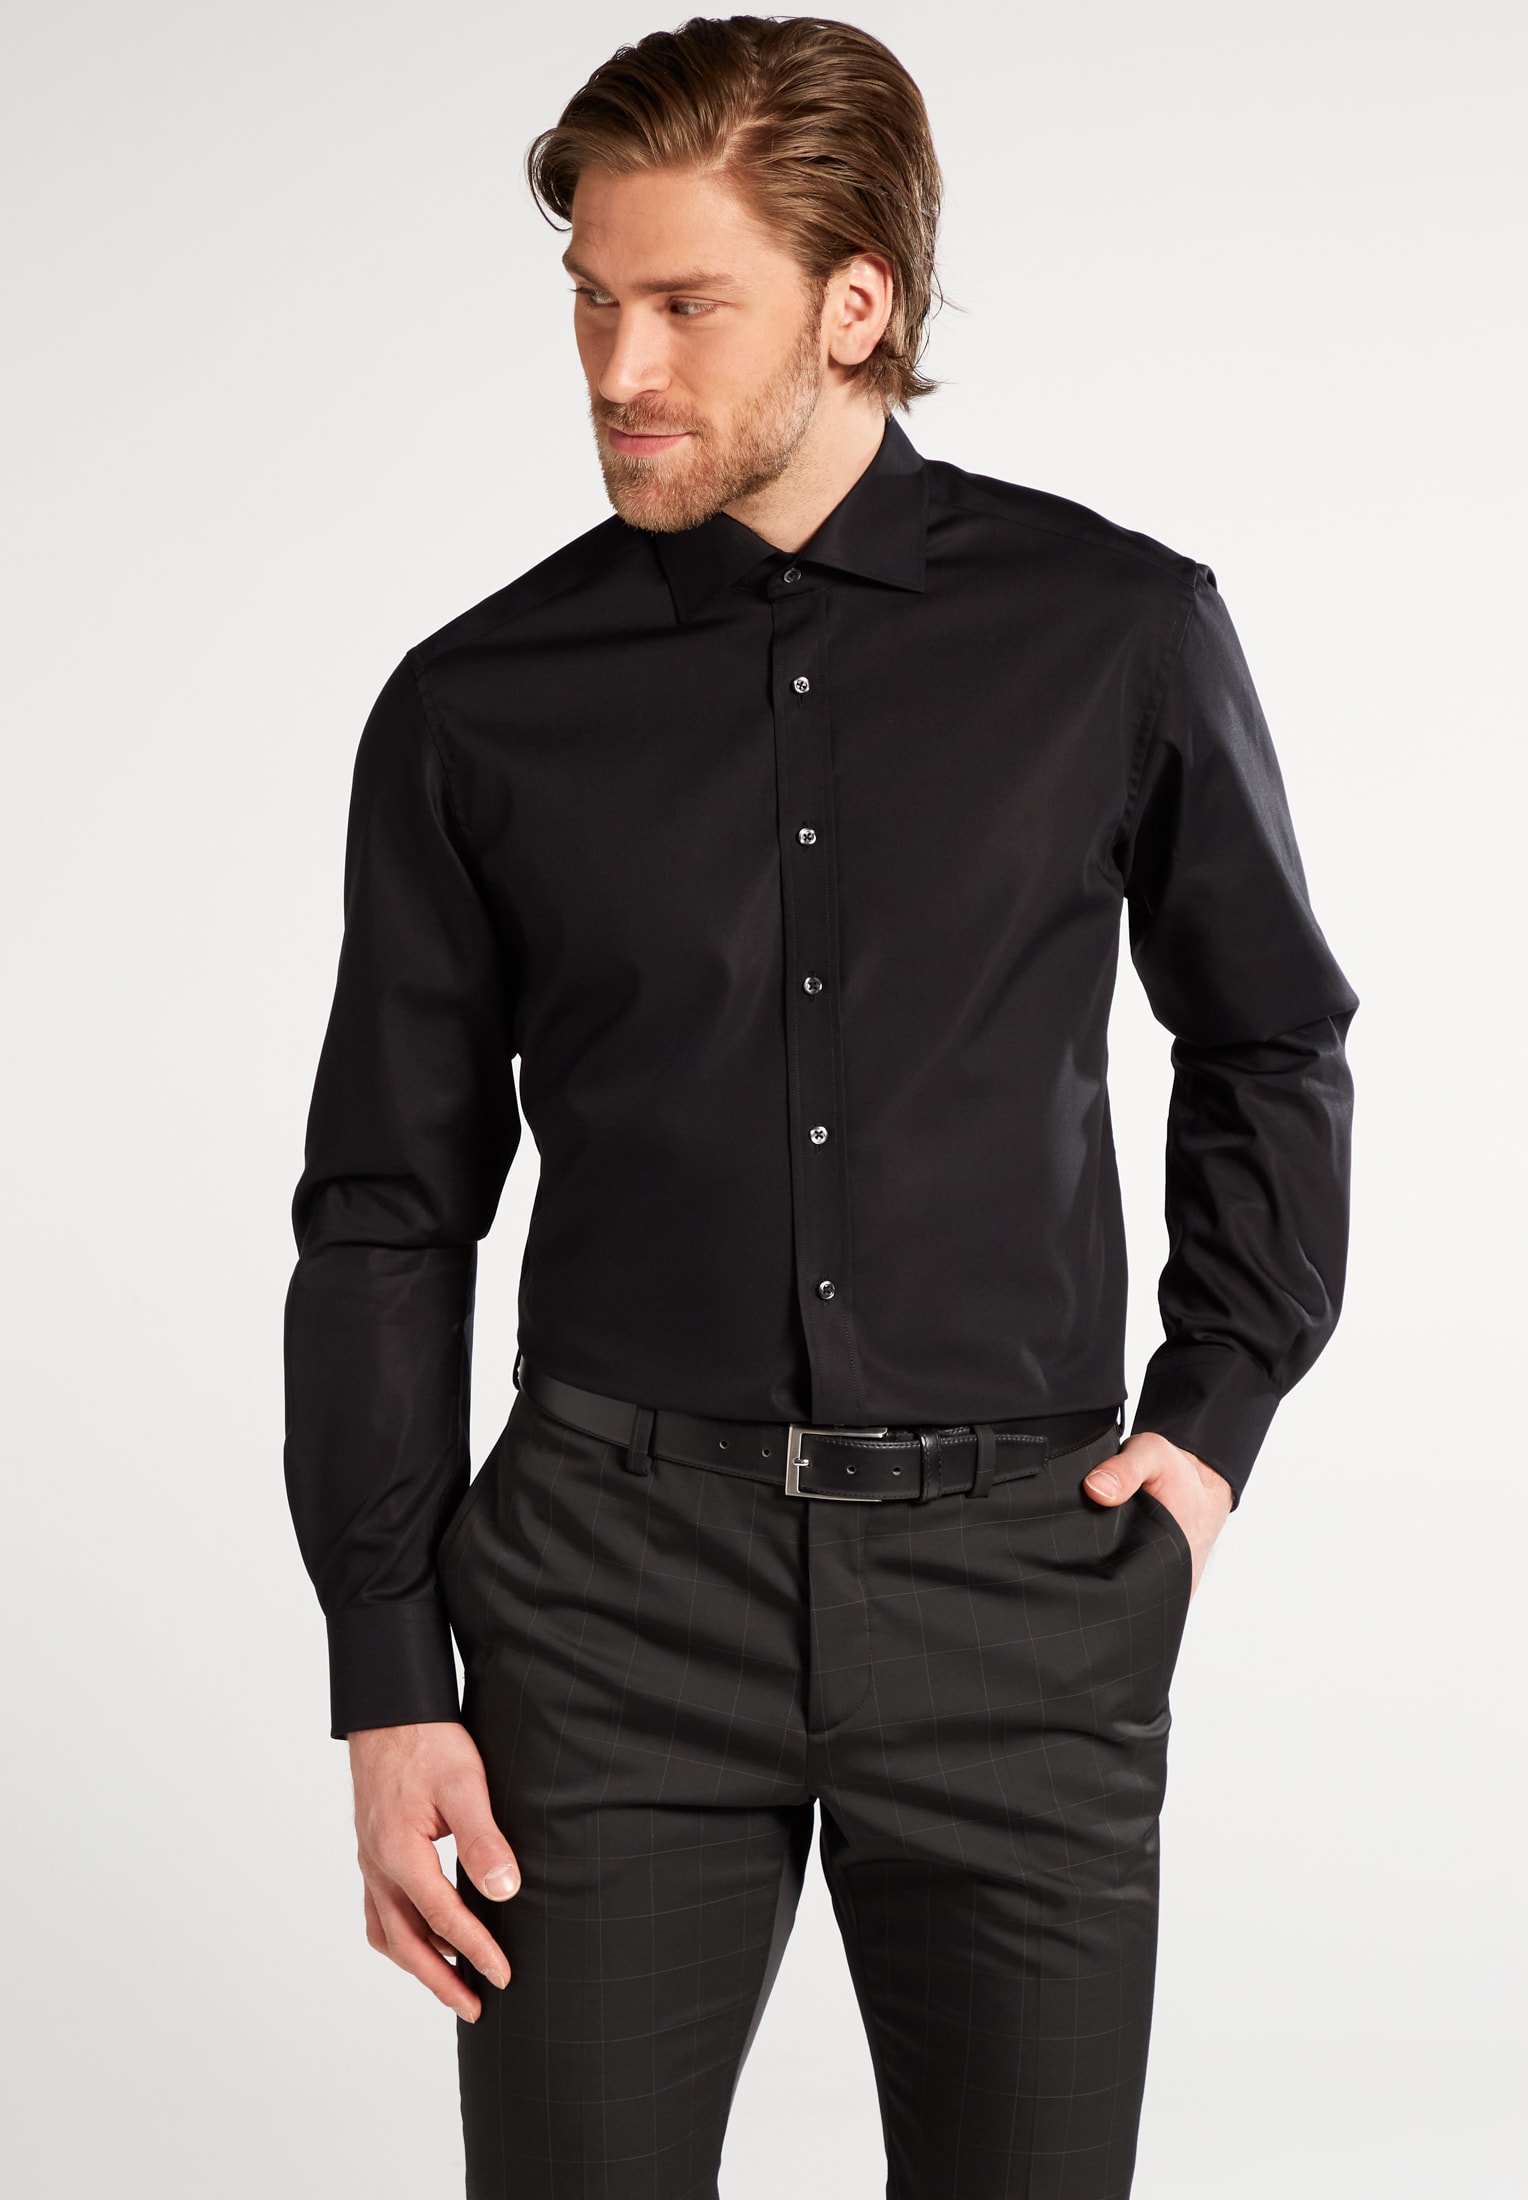 1SH00113-03-91-41-1/1 | Shirt | Langarm in 41 Original unifarben schwarz FIT | schwarz | MODERN